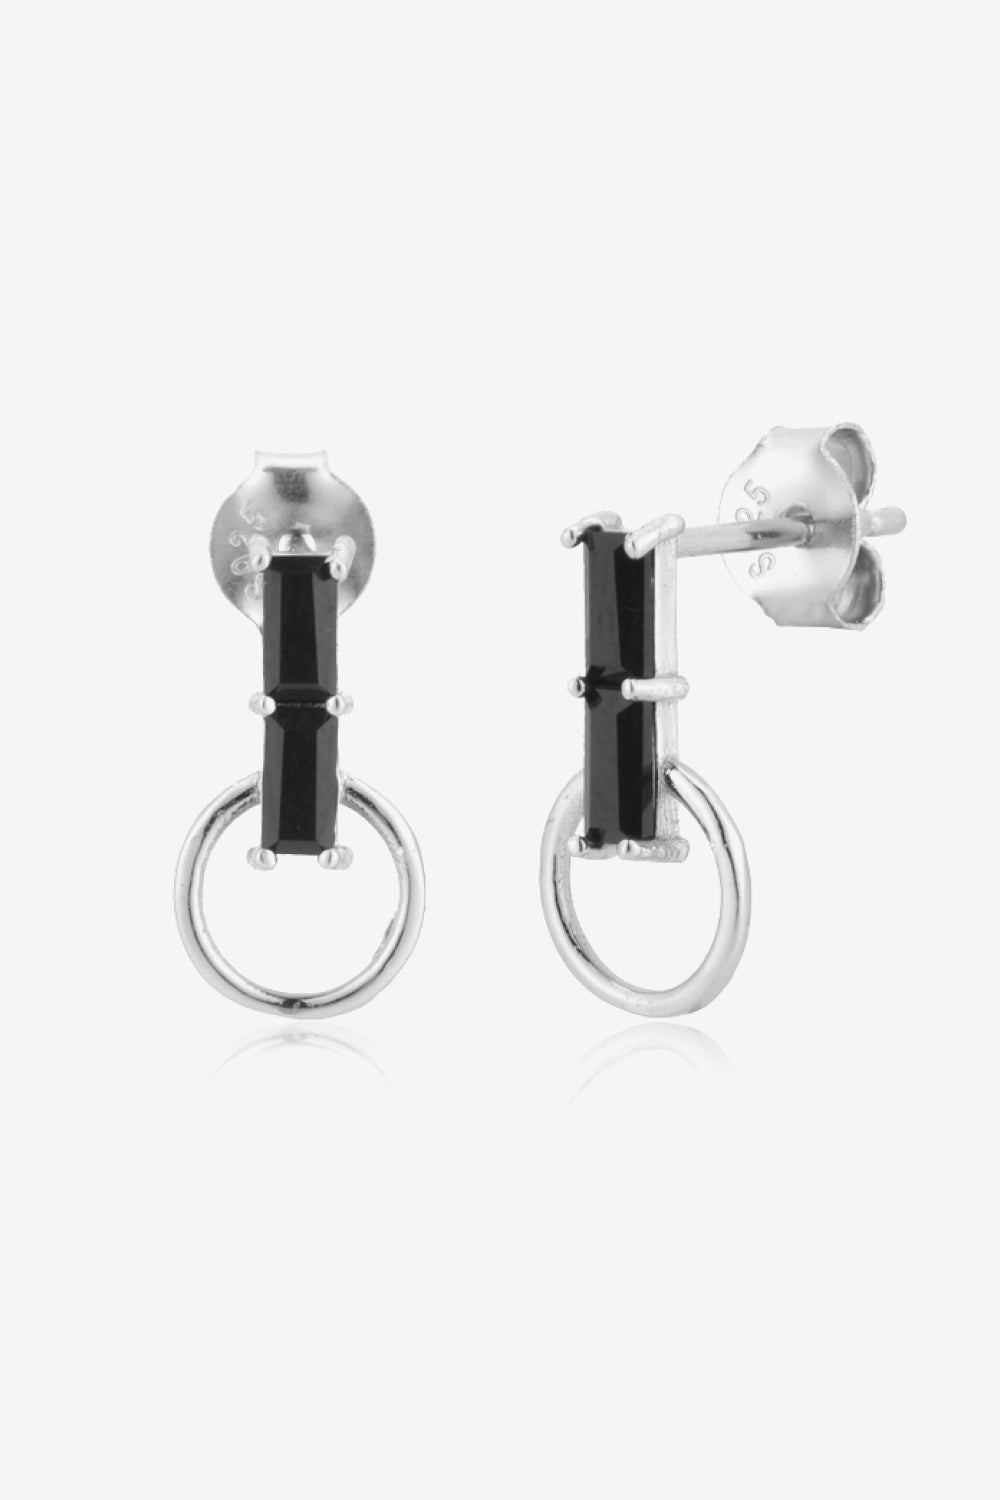 Zircon 925 Sterling Silver Hoop Drop Earrings - Earrings - FITGGINS